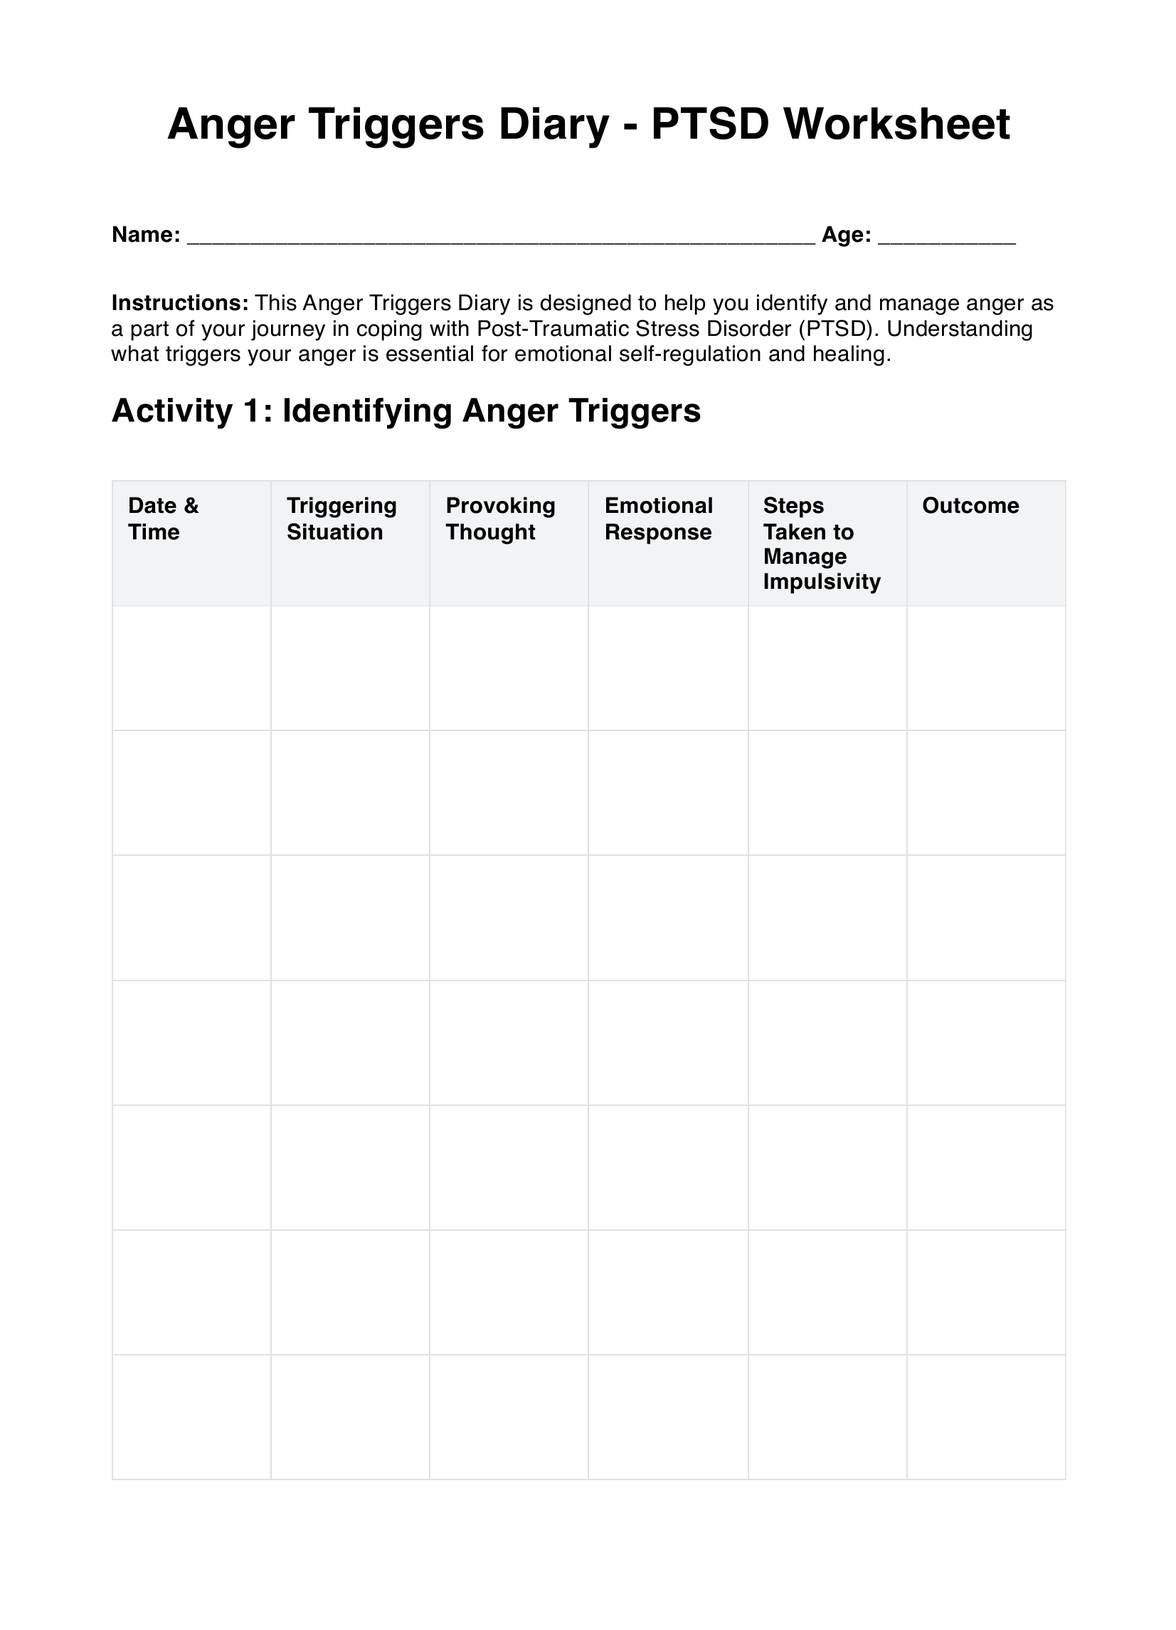 Anger Triggers Diary PTSD Worksheet PDF Example